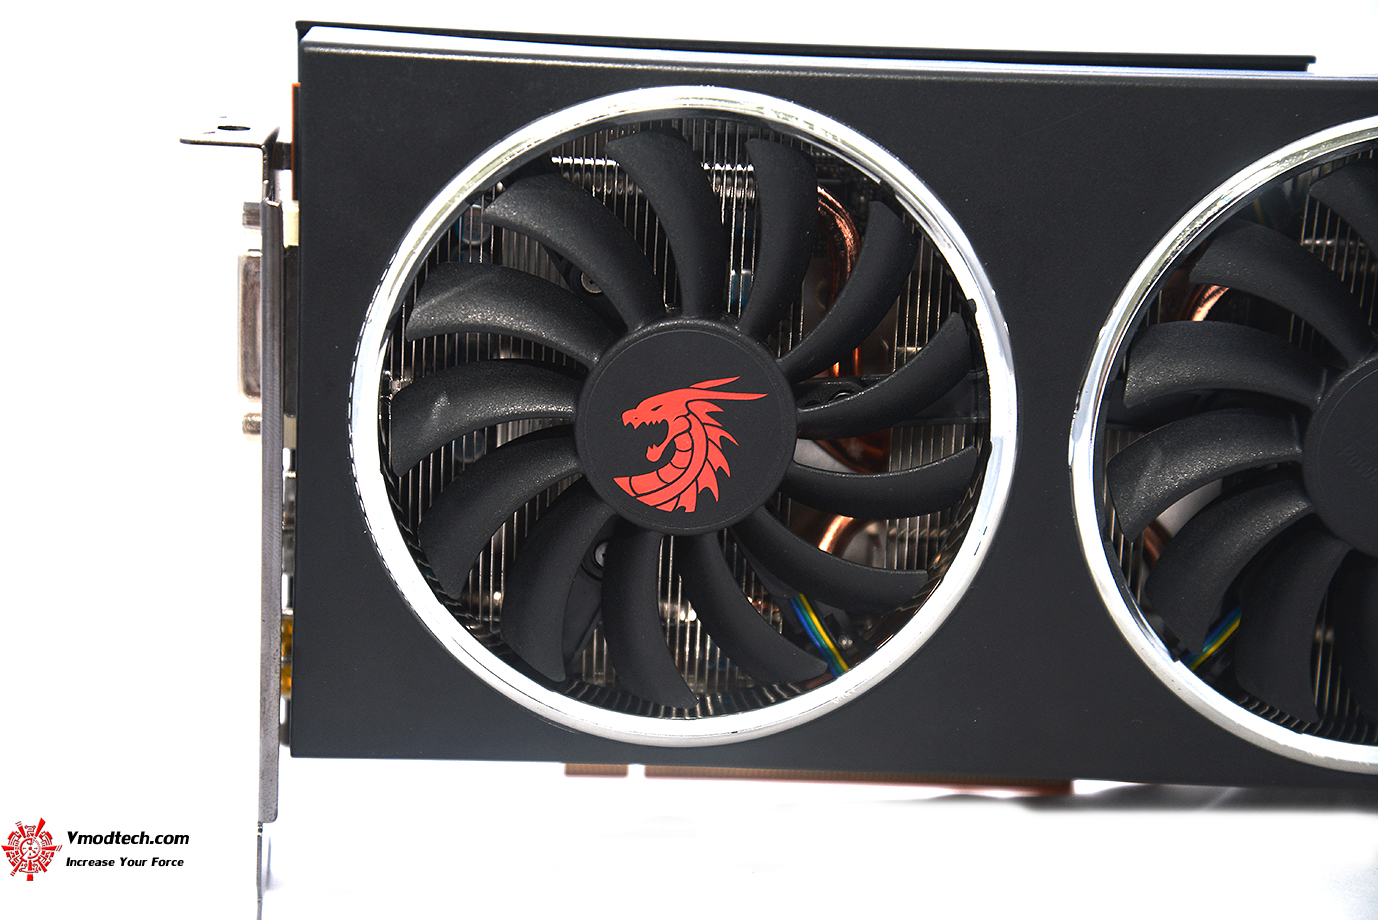 dsc 3935 PowerColor Red Dragon Radeon RX 5500 XT EP2 Review